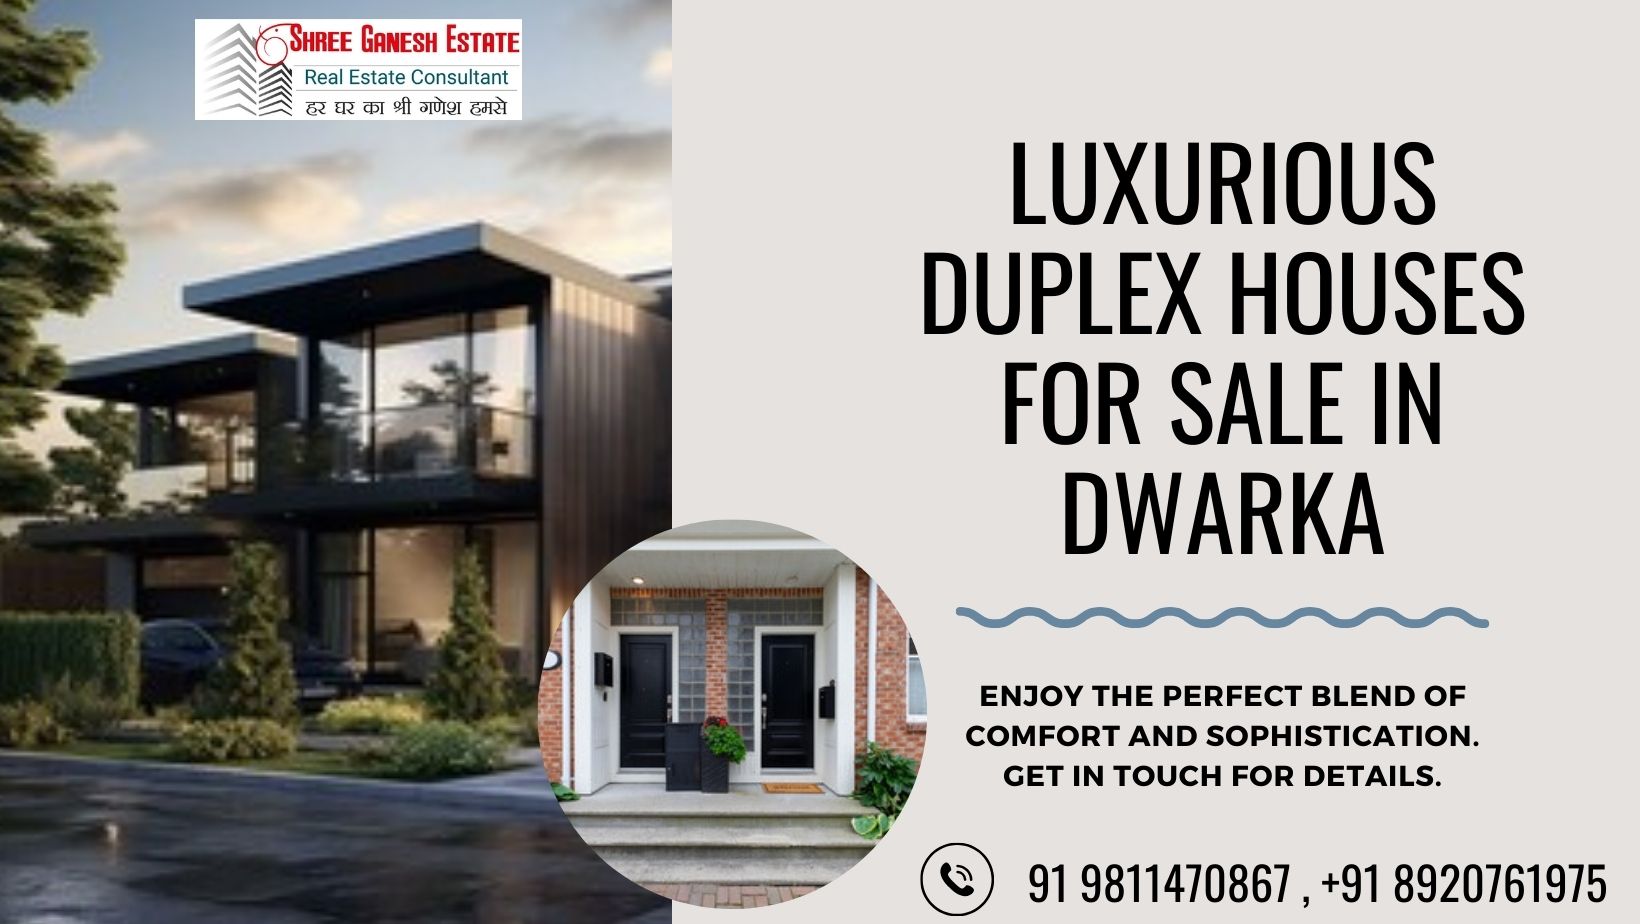 Duplex Houses for Sale in Dwarka- Shree Ganesh Estate